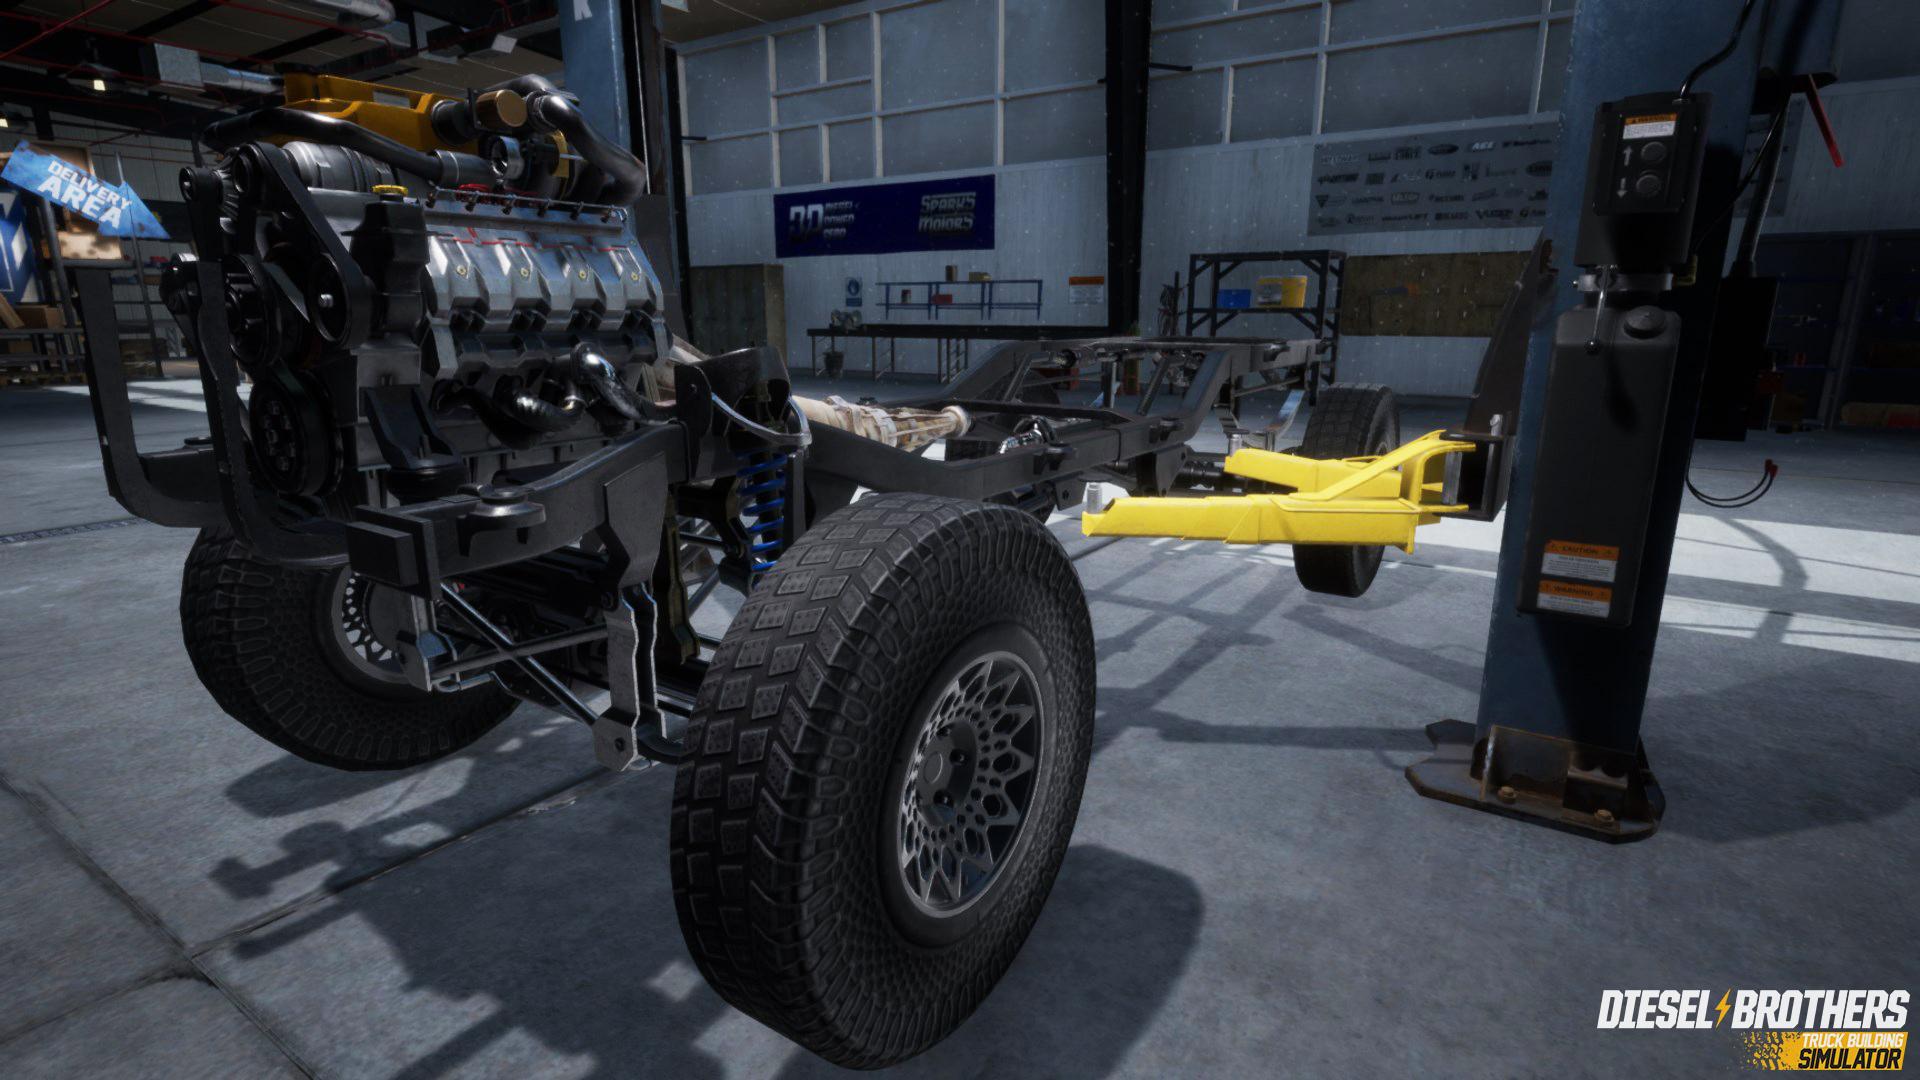 Diesel Brothers: Truck Building Simulator on Steam